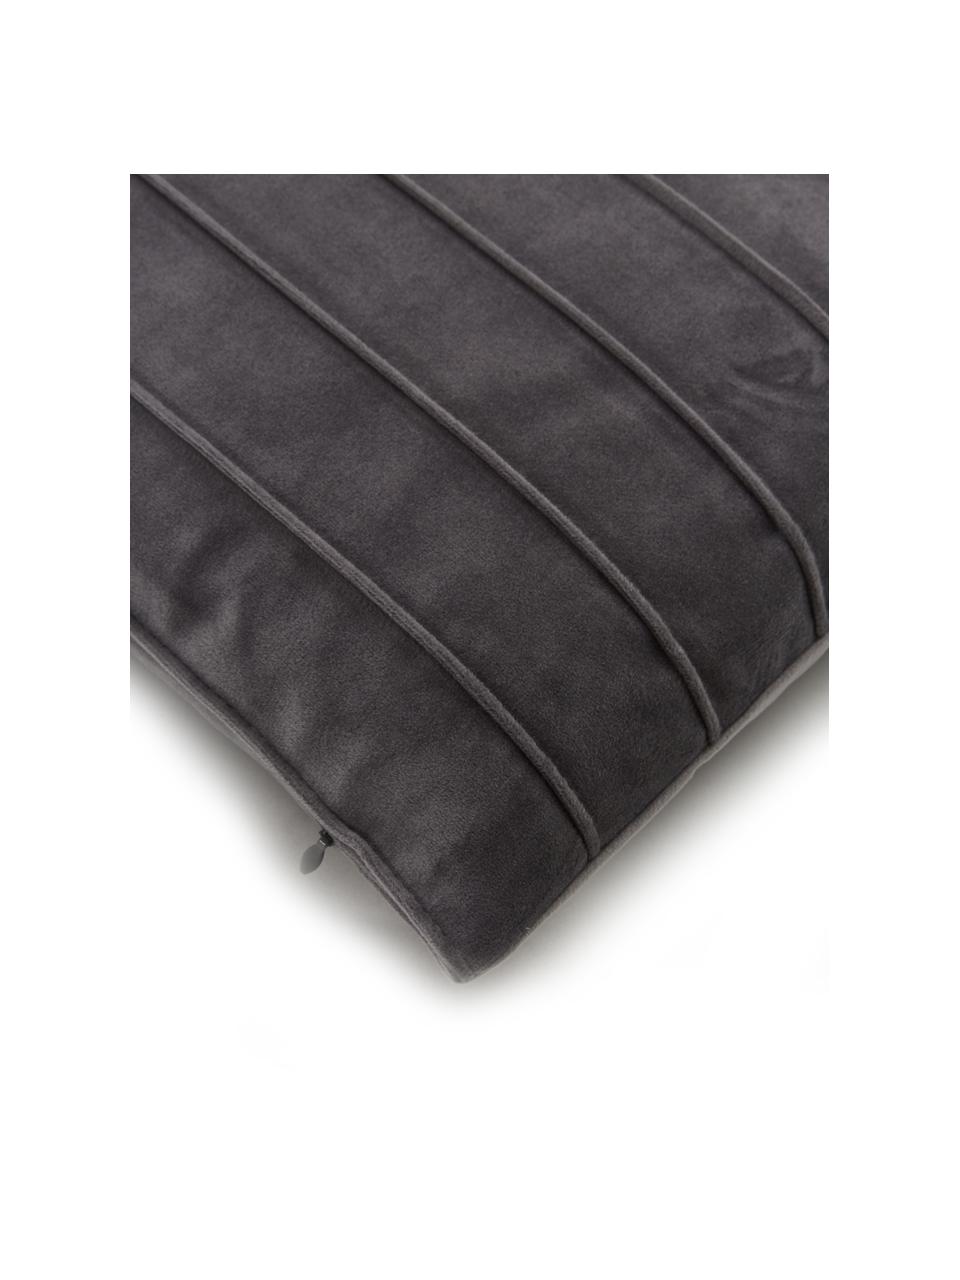 Fluwelen kussenhoes Lola in donkergrijs met structuurpatroon, Fluweel (100% polyester), Donkergrijs, B 30 x L 50 cm